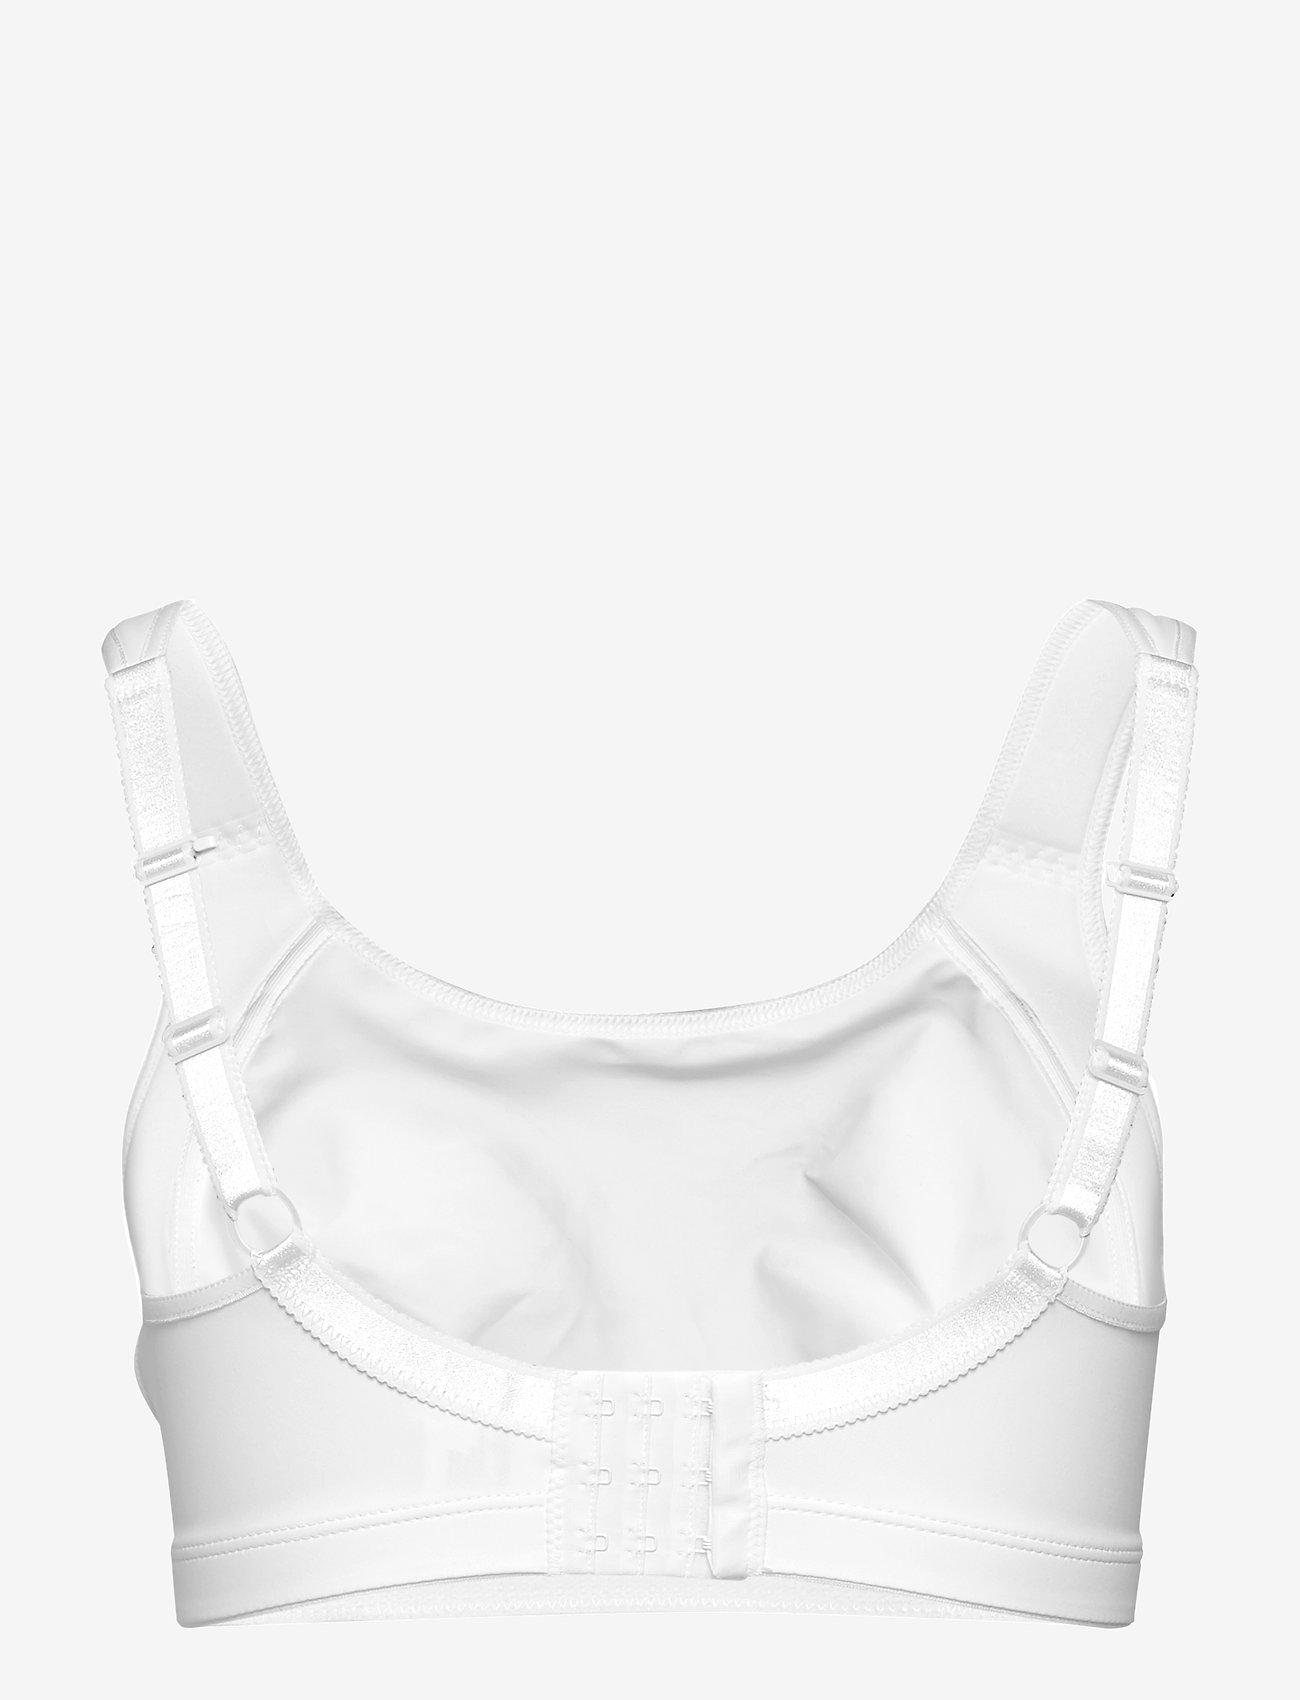 Abecita - Dynamic Sports bra - sport-bhs - white/grey - 1